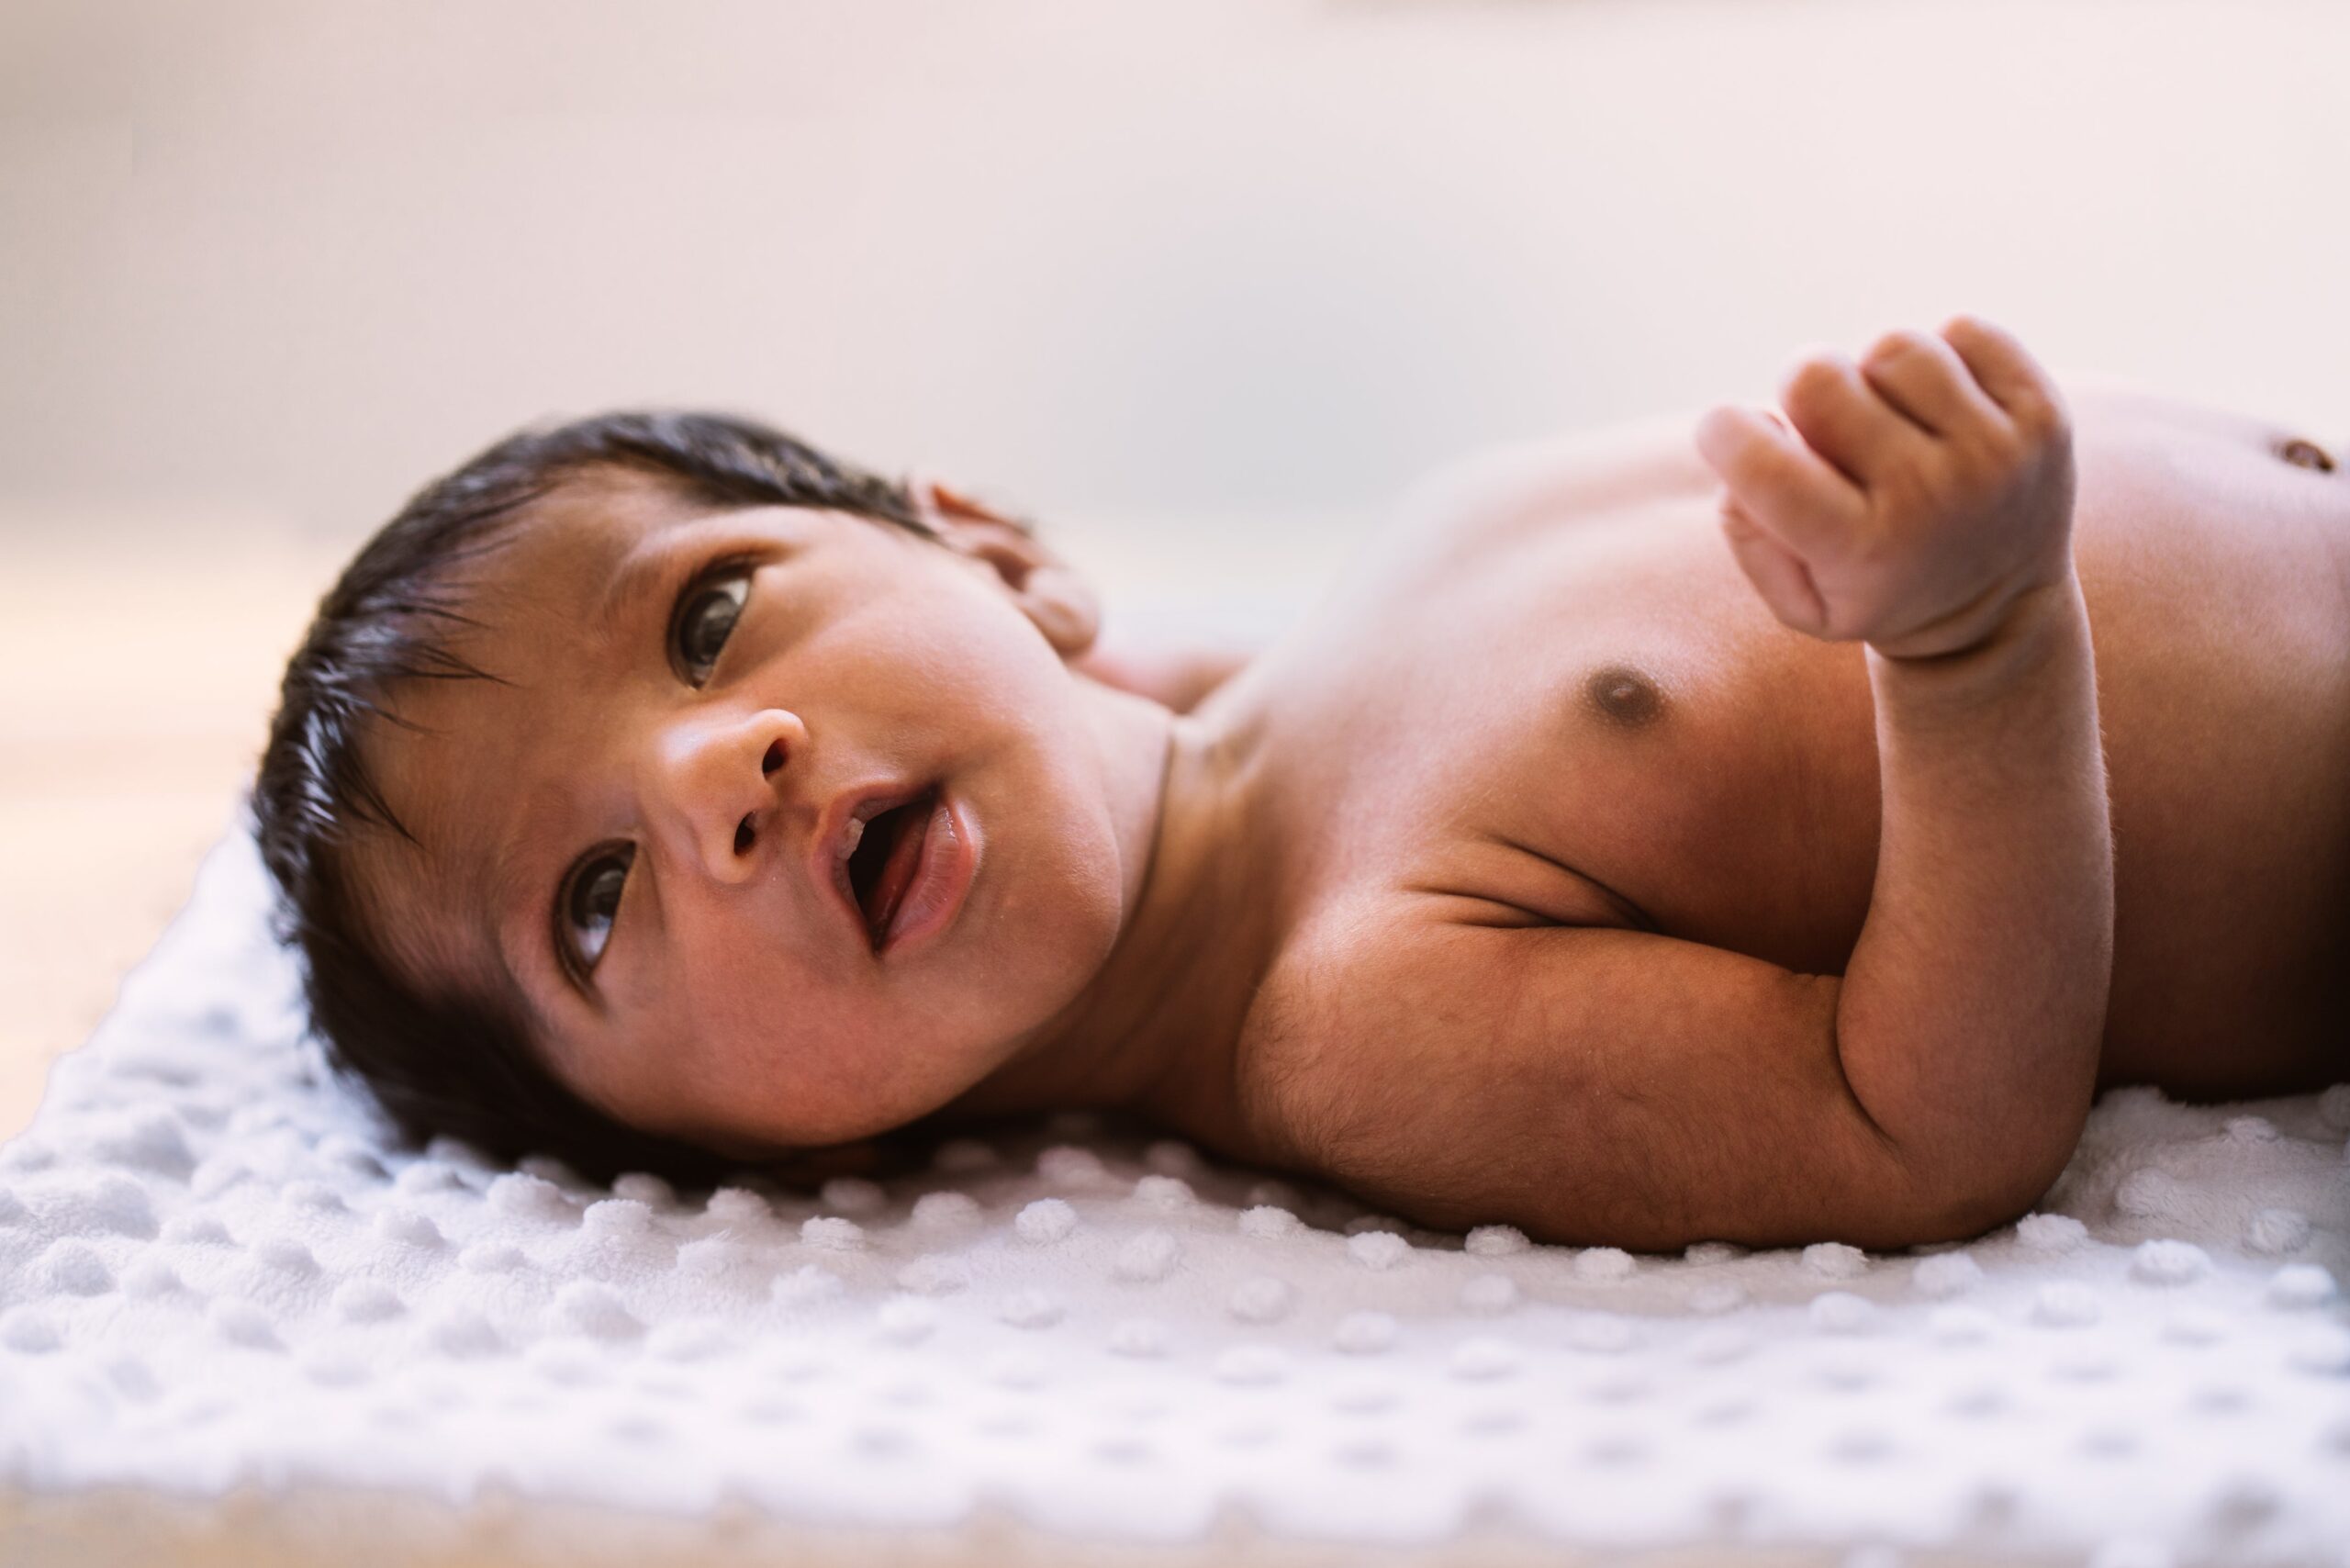 newborn boy circumcision in Islam